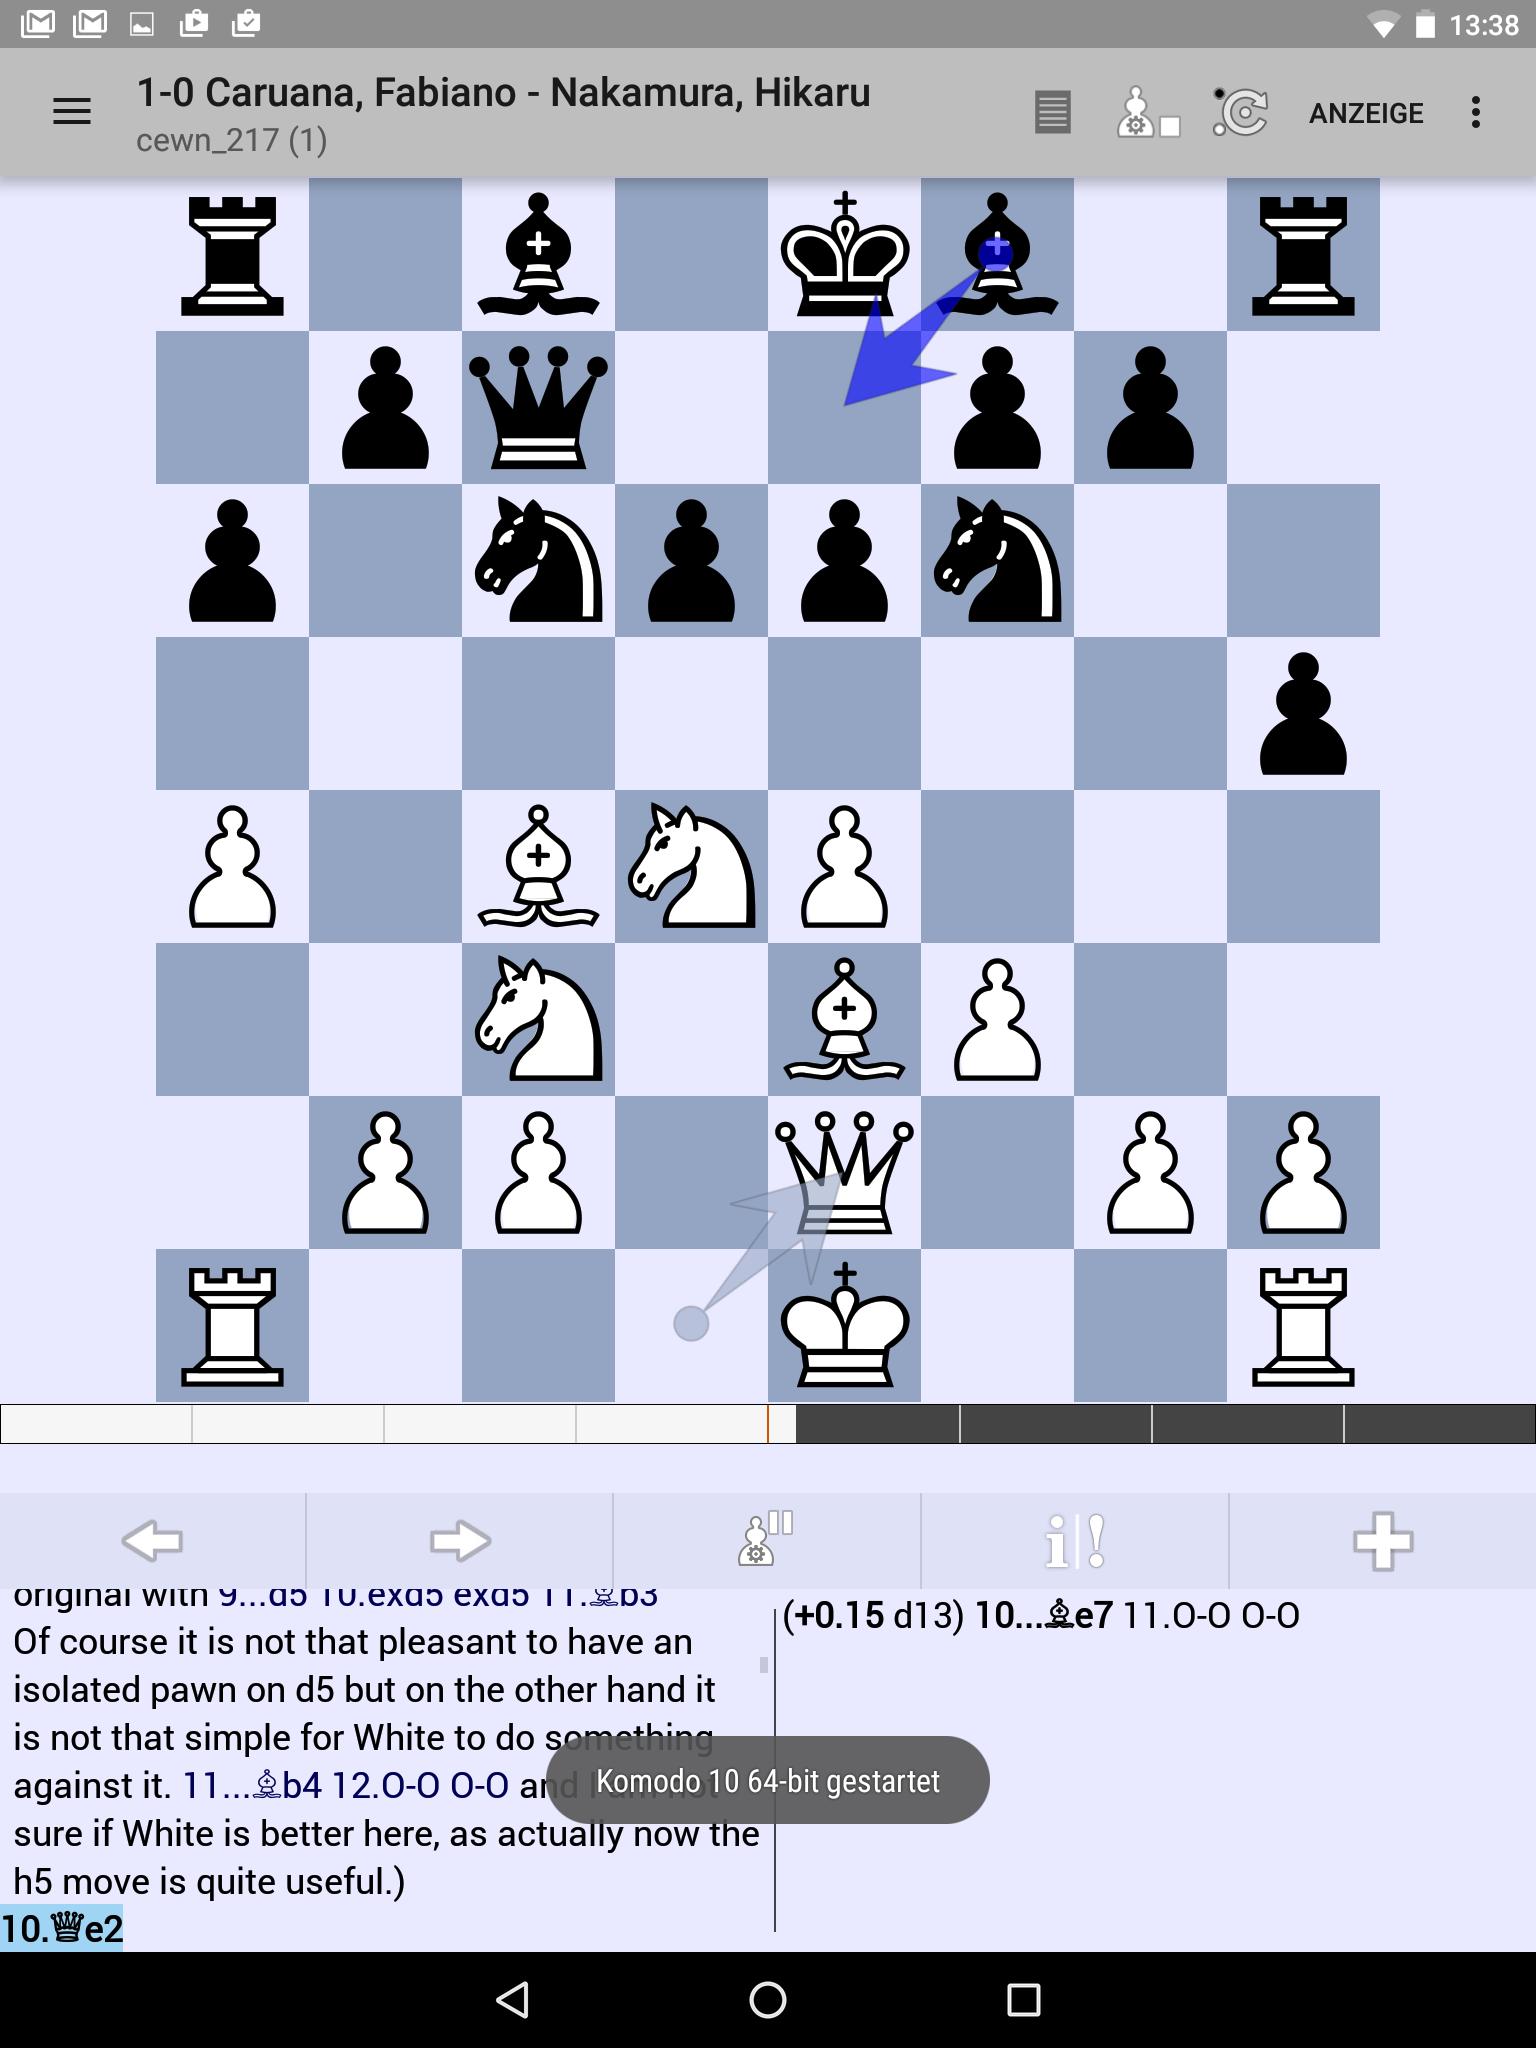 komodo chess 12.3.1